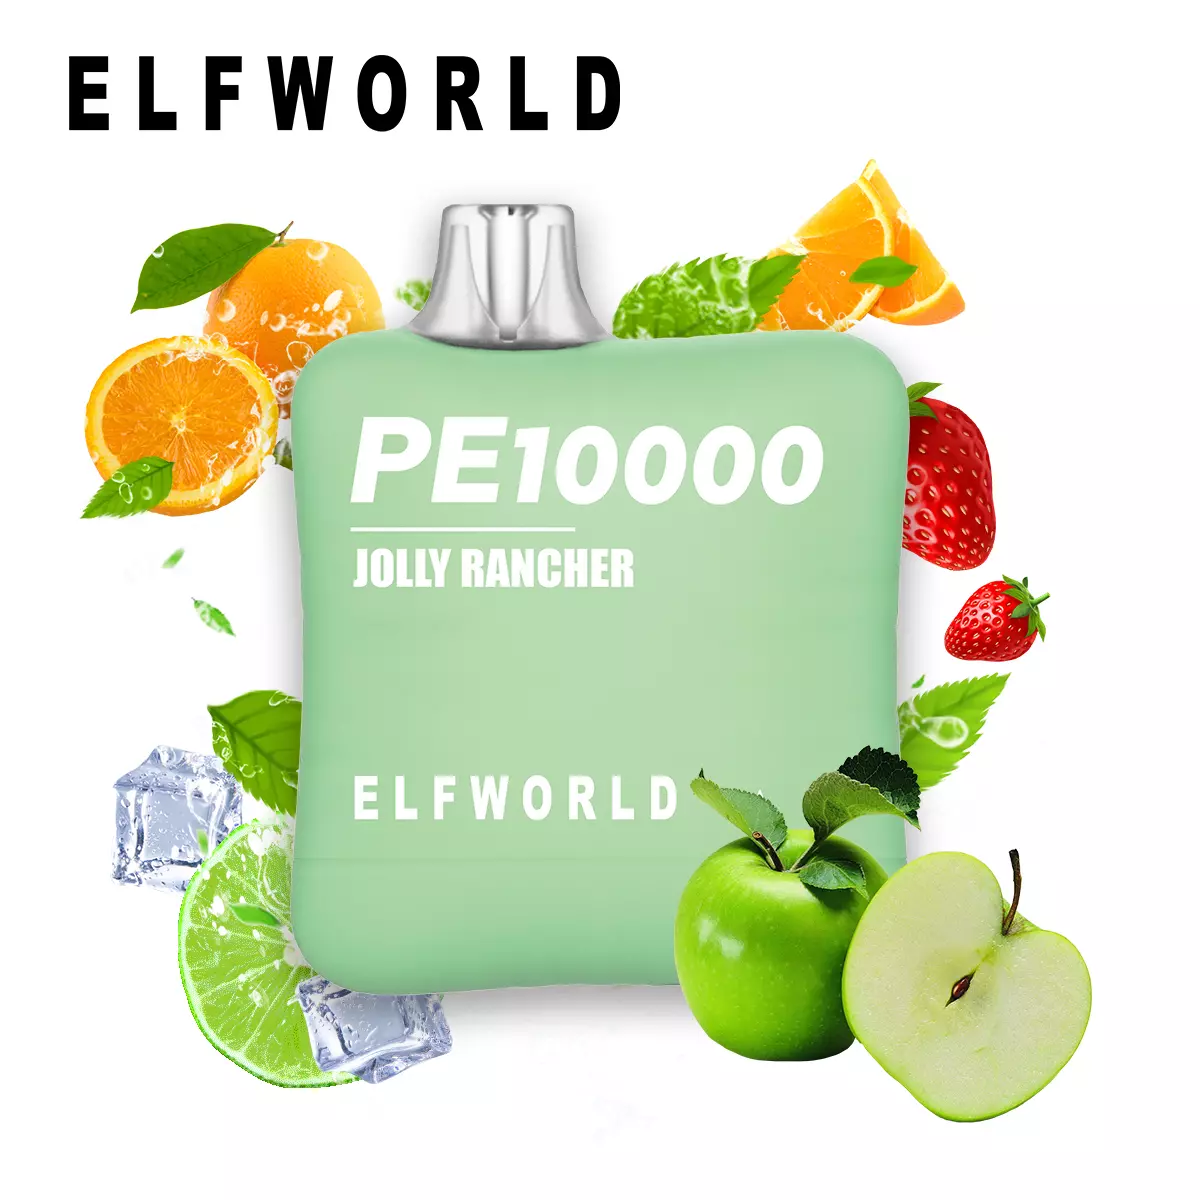 Elf World PE 10000 Jolly Rancher